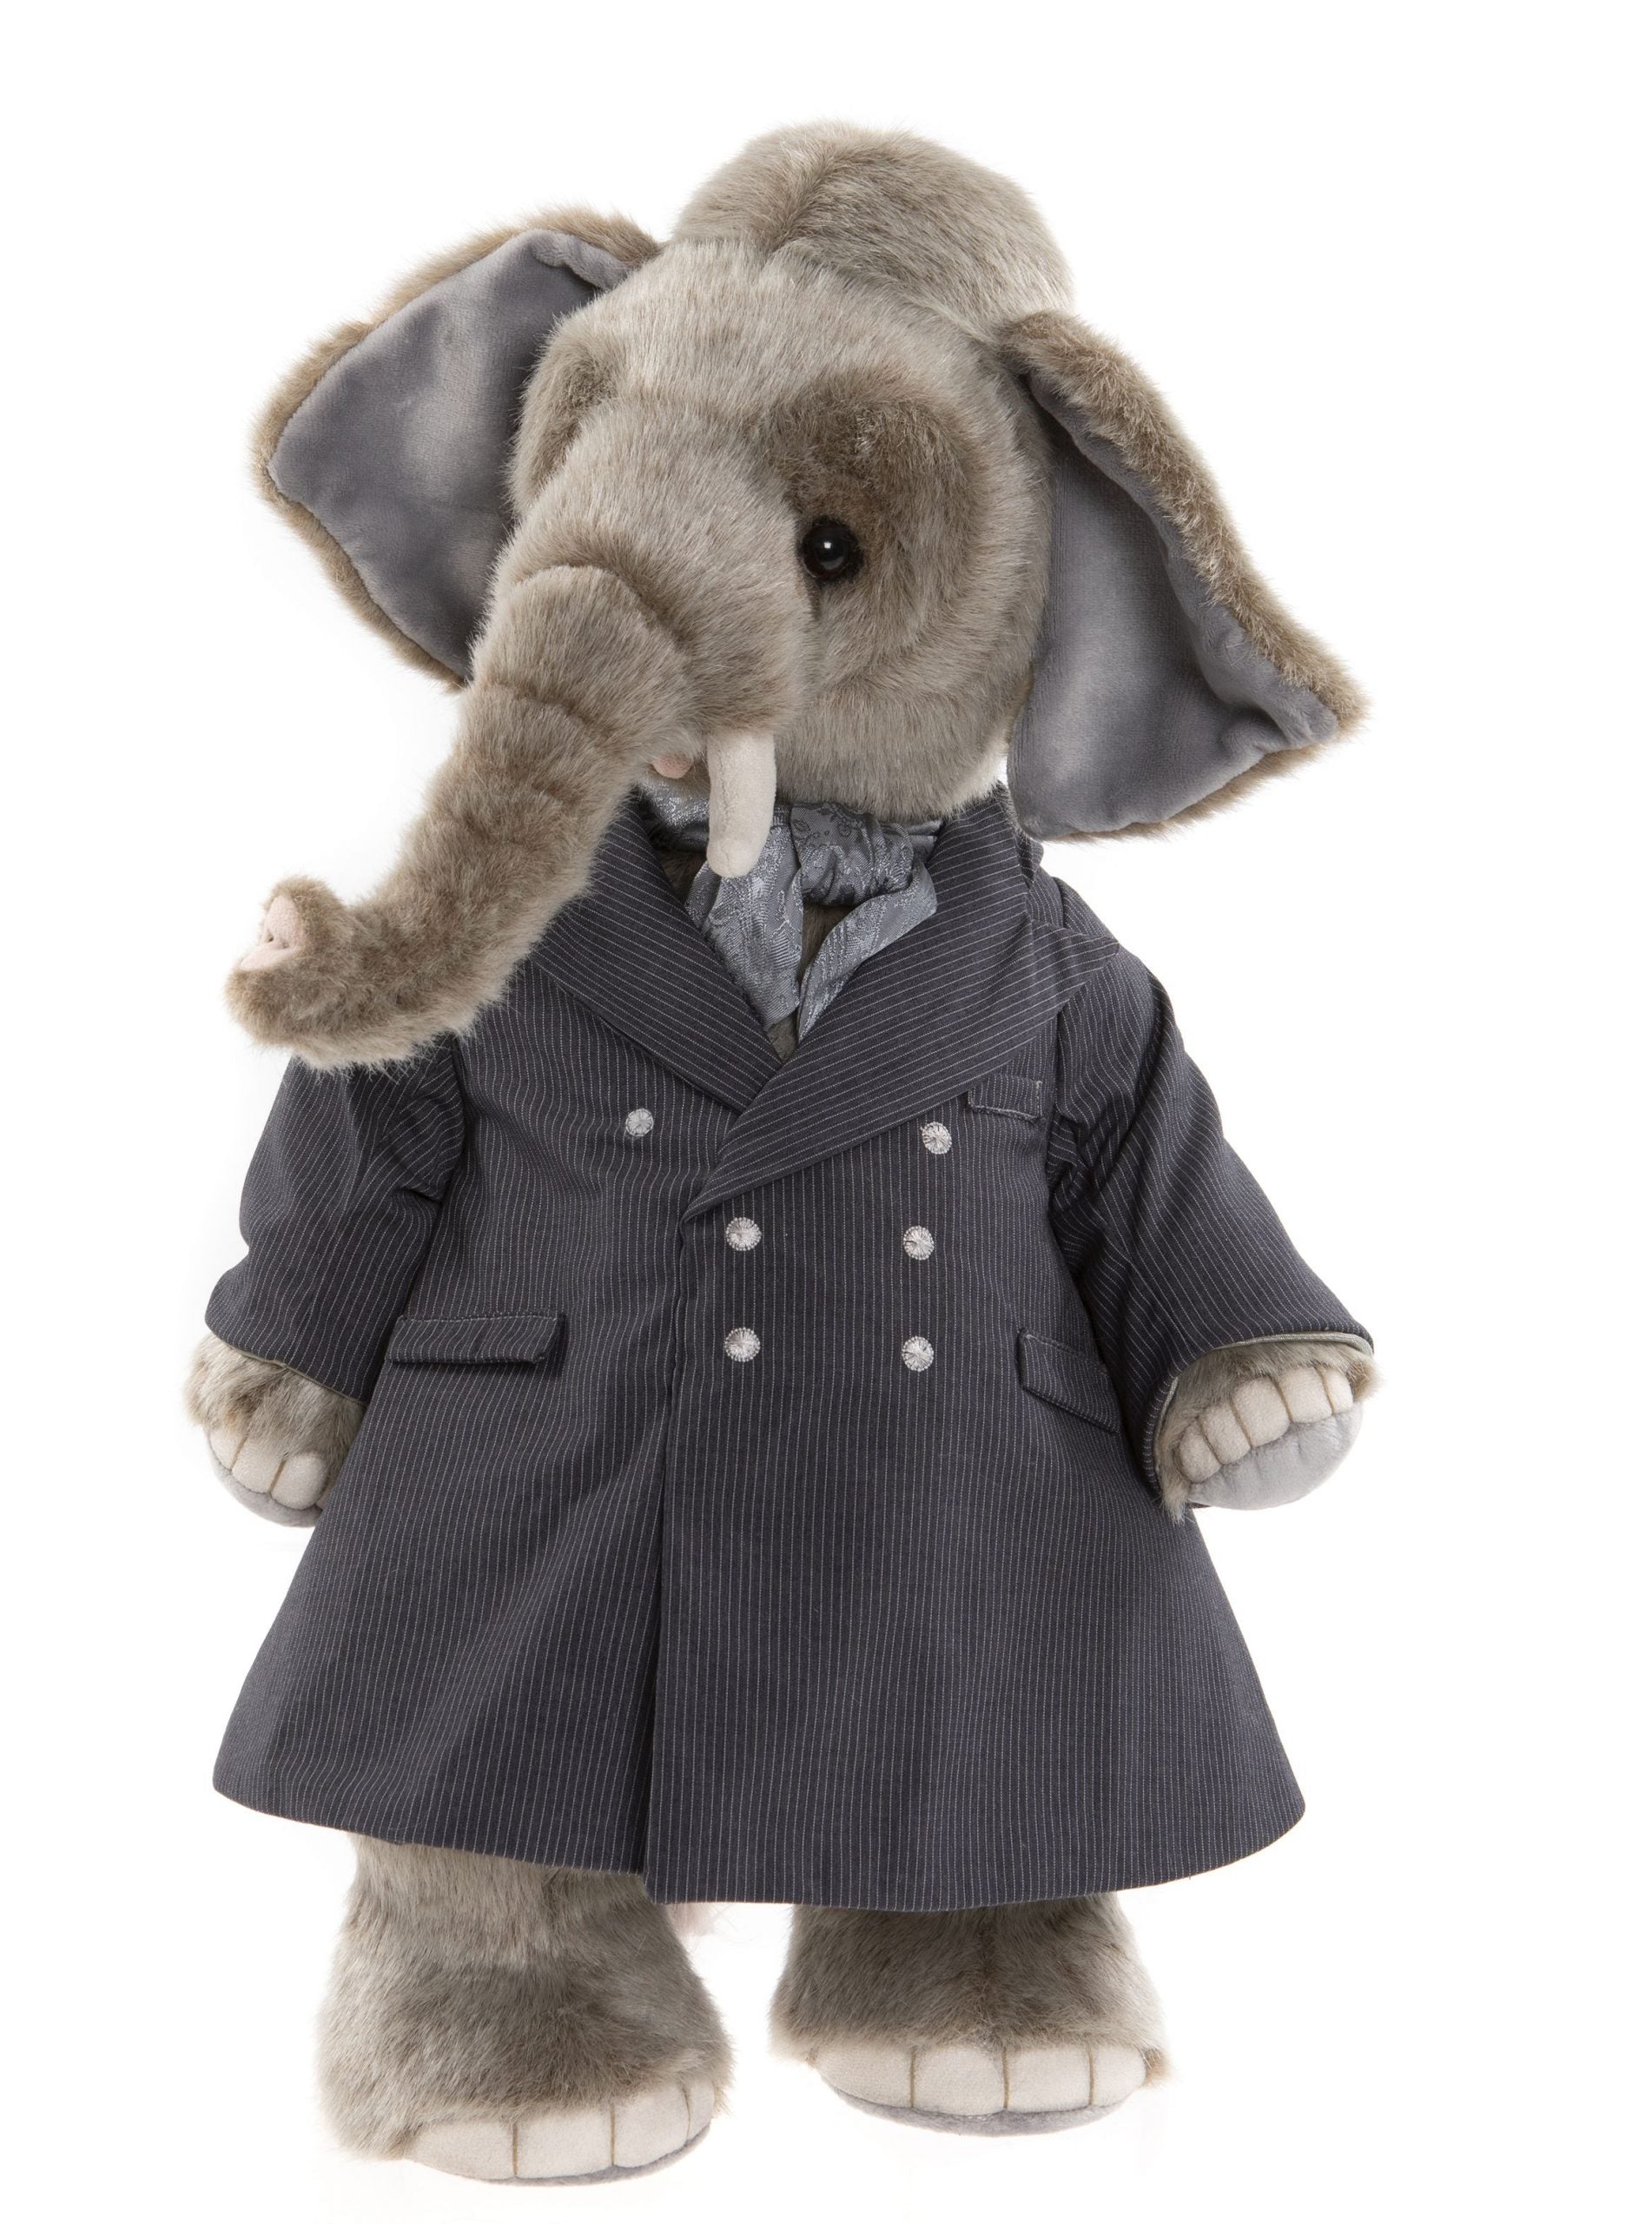 Stroll Elephant in Jacket by Charlie Bears